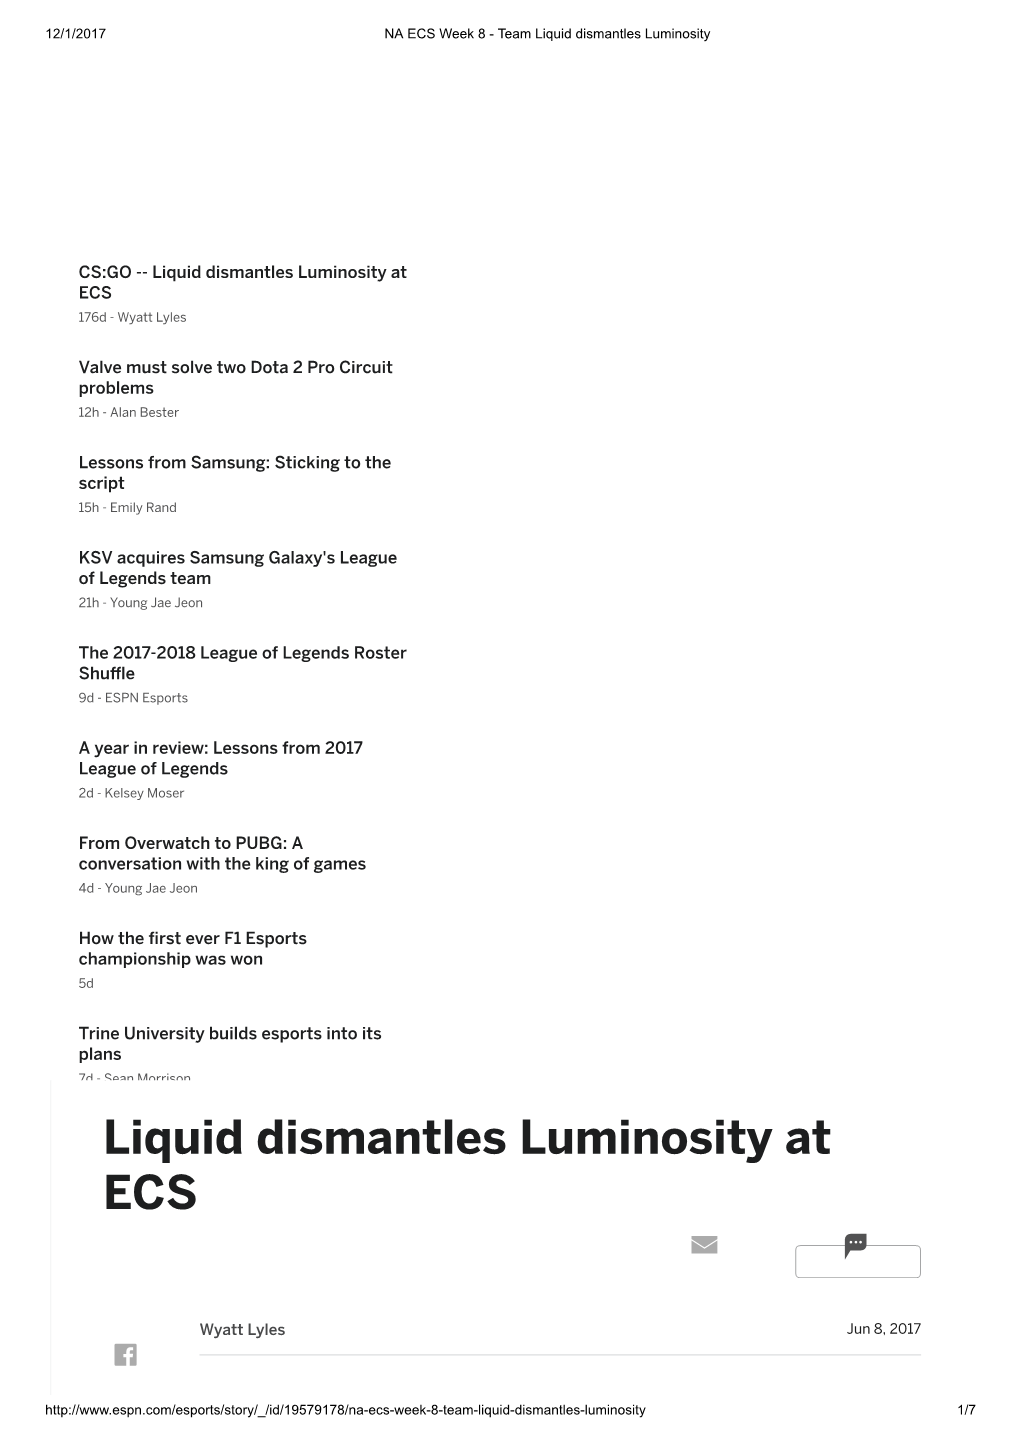 Liquid Dismantles Luminosity at ECS 176D - Wyatt Lyles